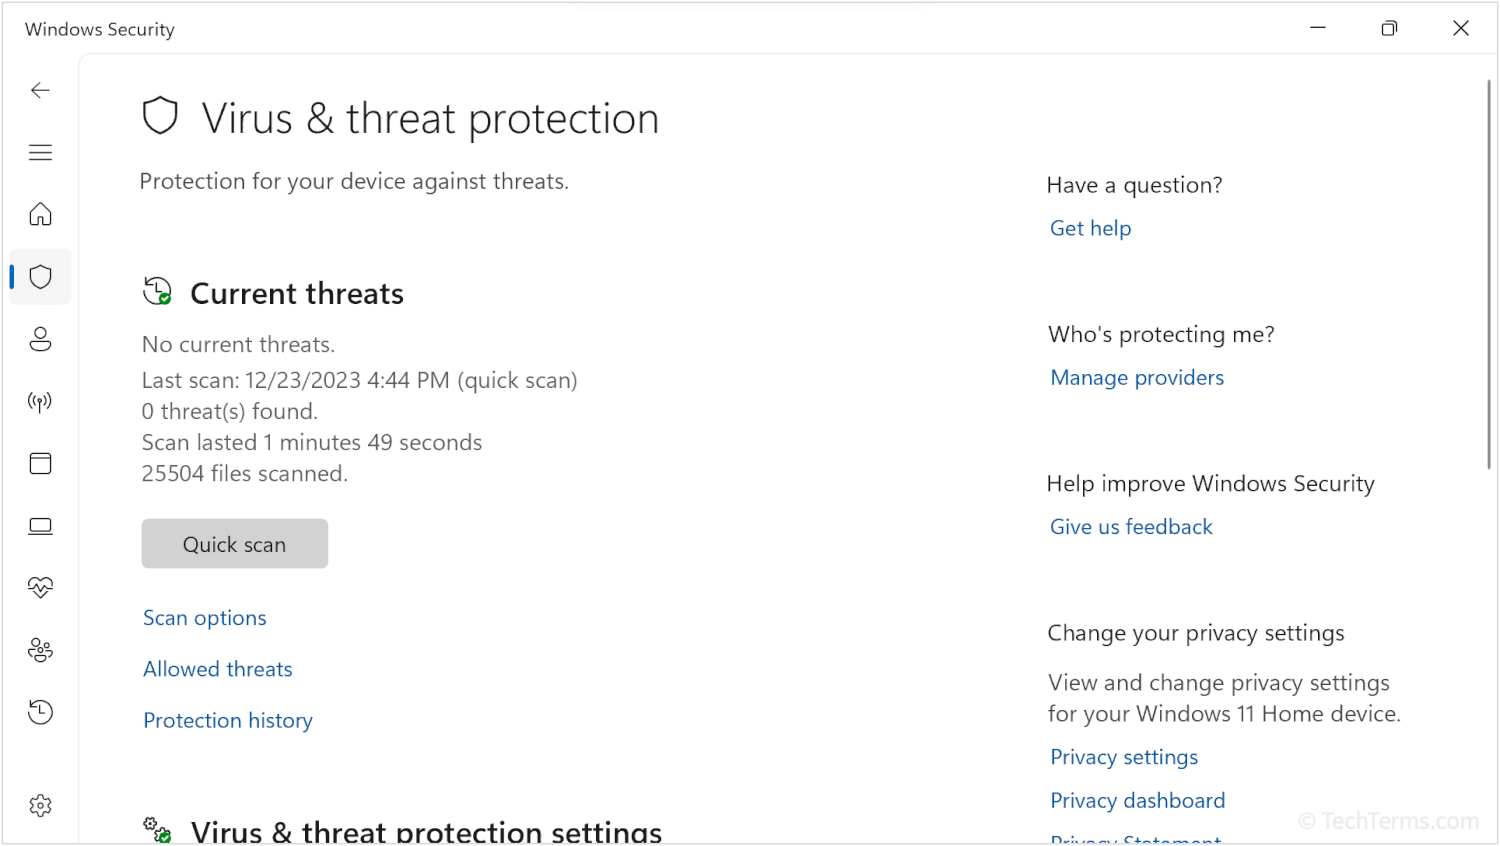 Windows 11 includes built-in antivirus software